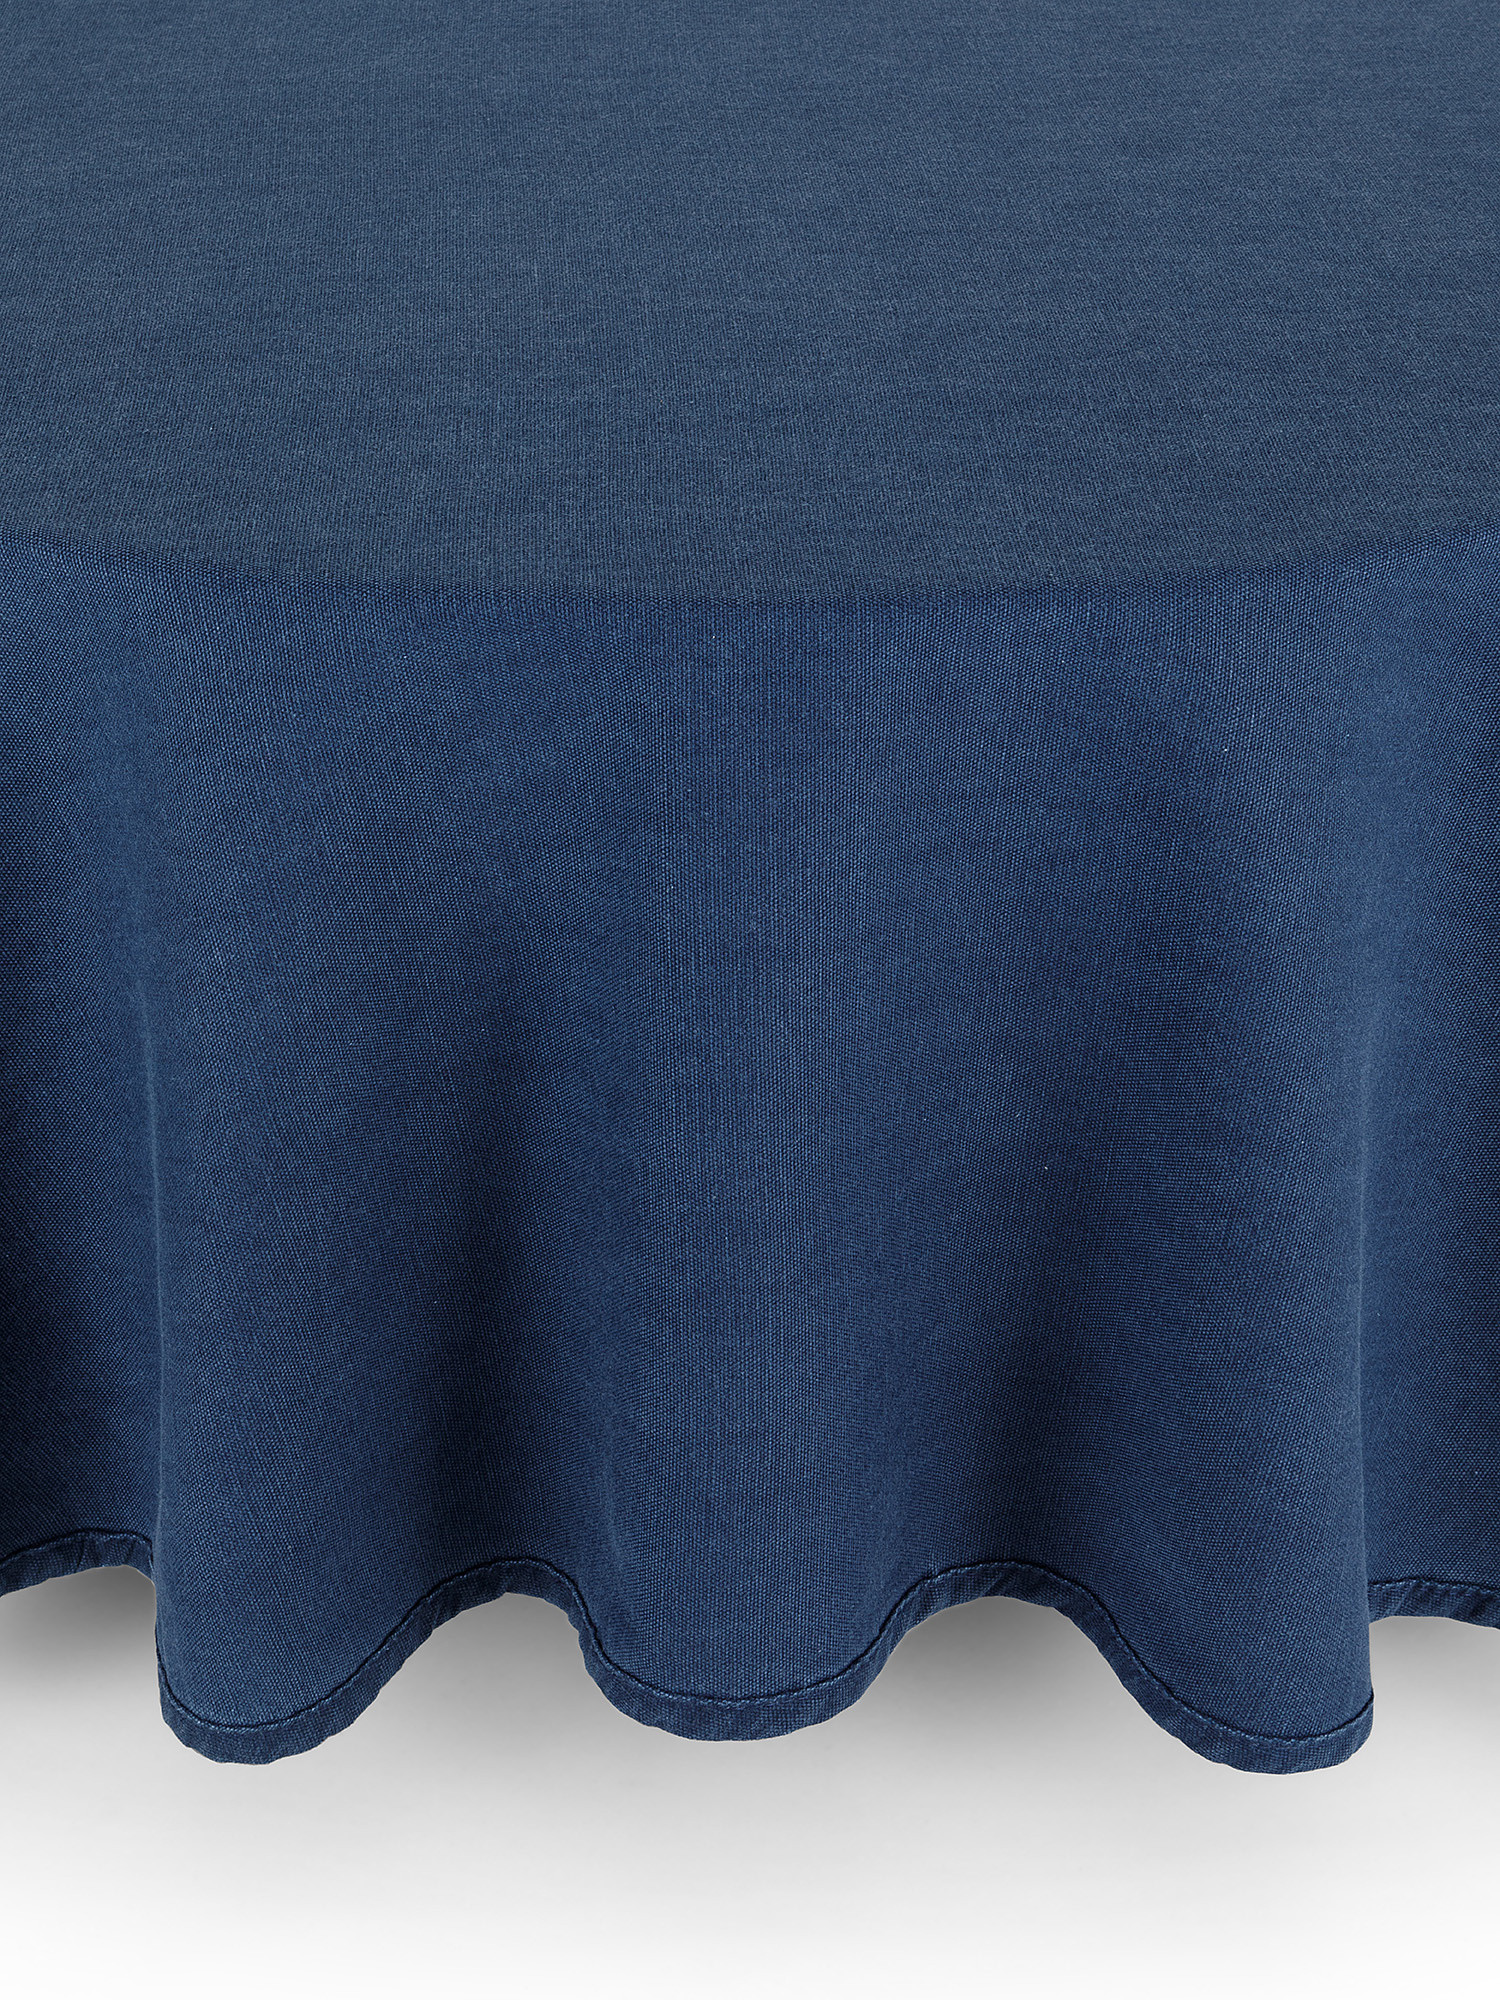 Tovaglia ovale in cotone lavato tinta unita, Blu, large image number 0